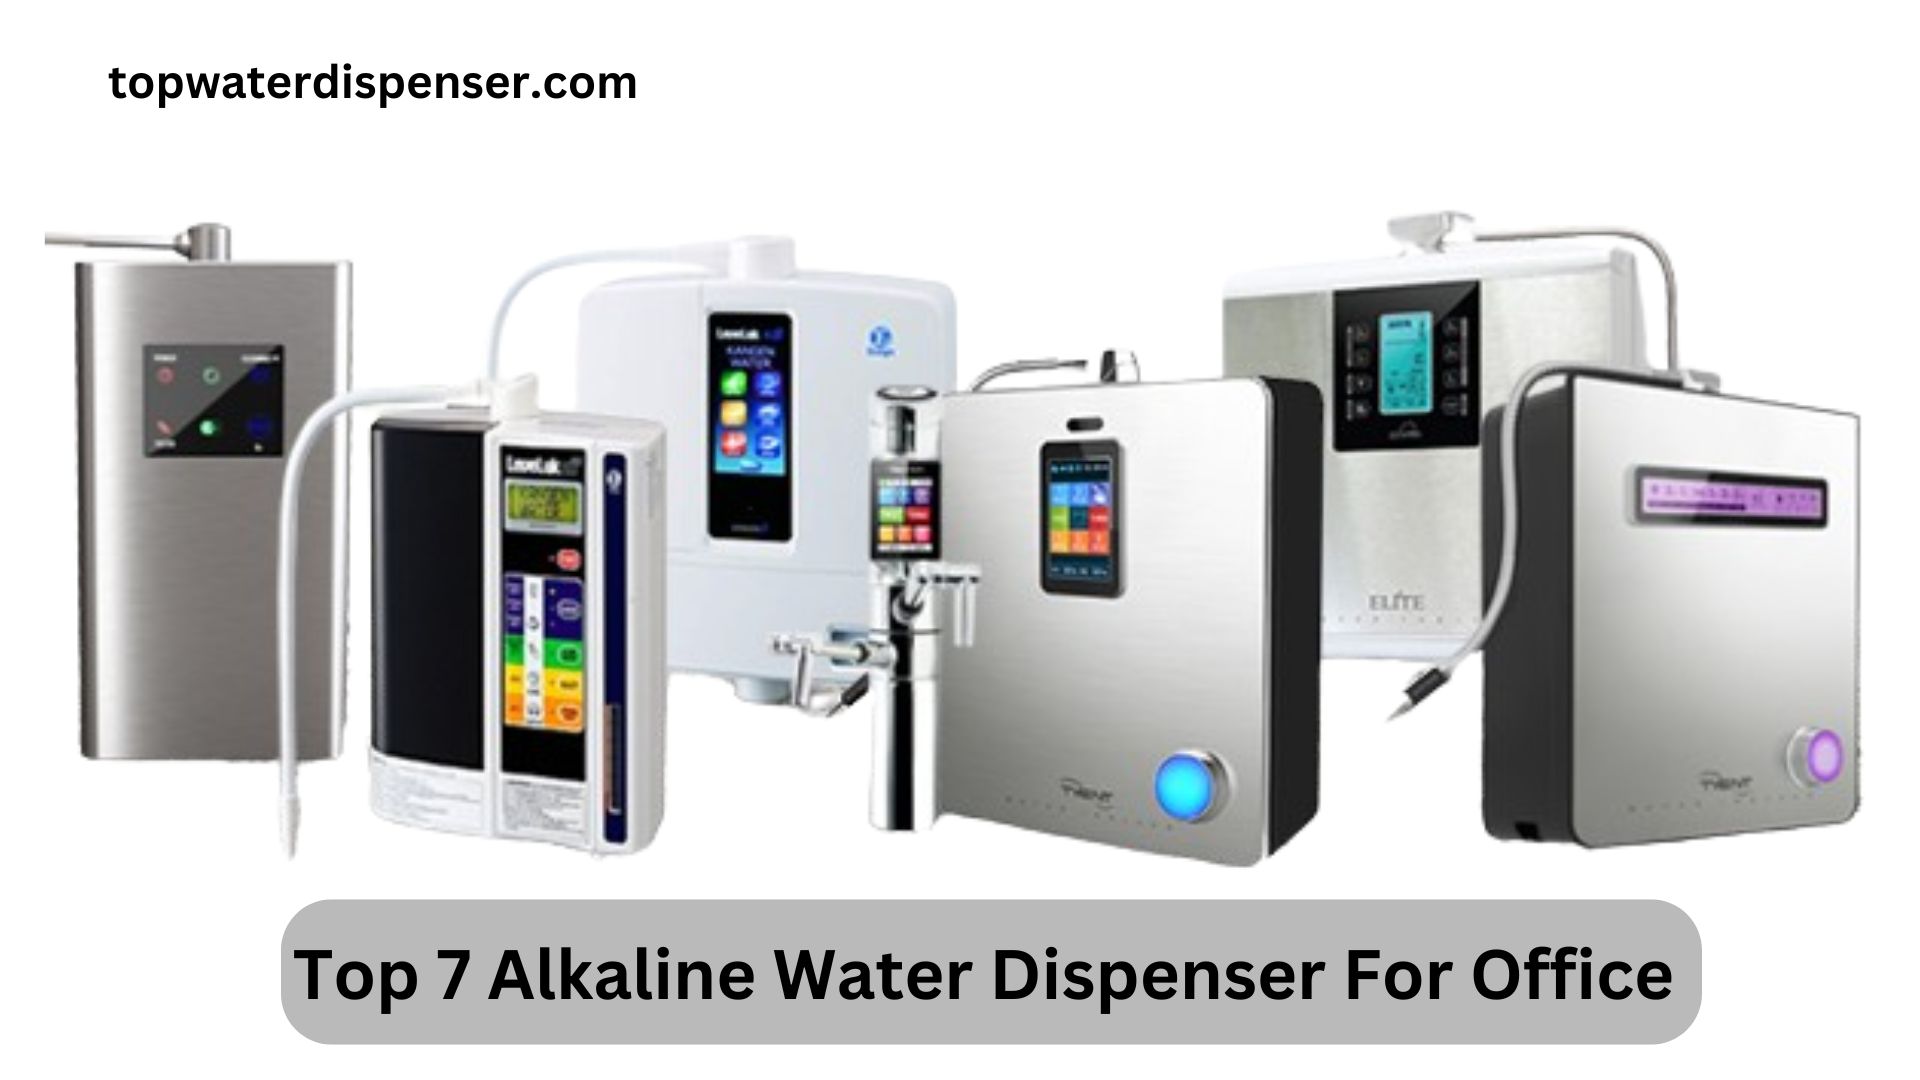 Top 7 Alkaline Water Dispenser For Office